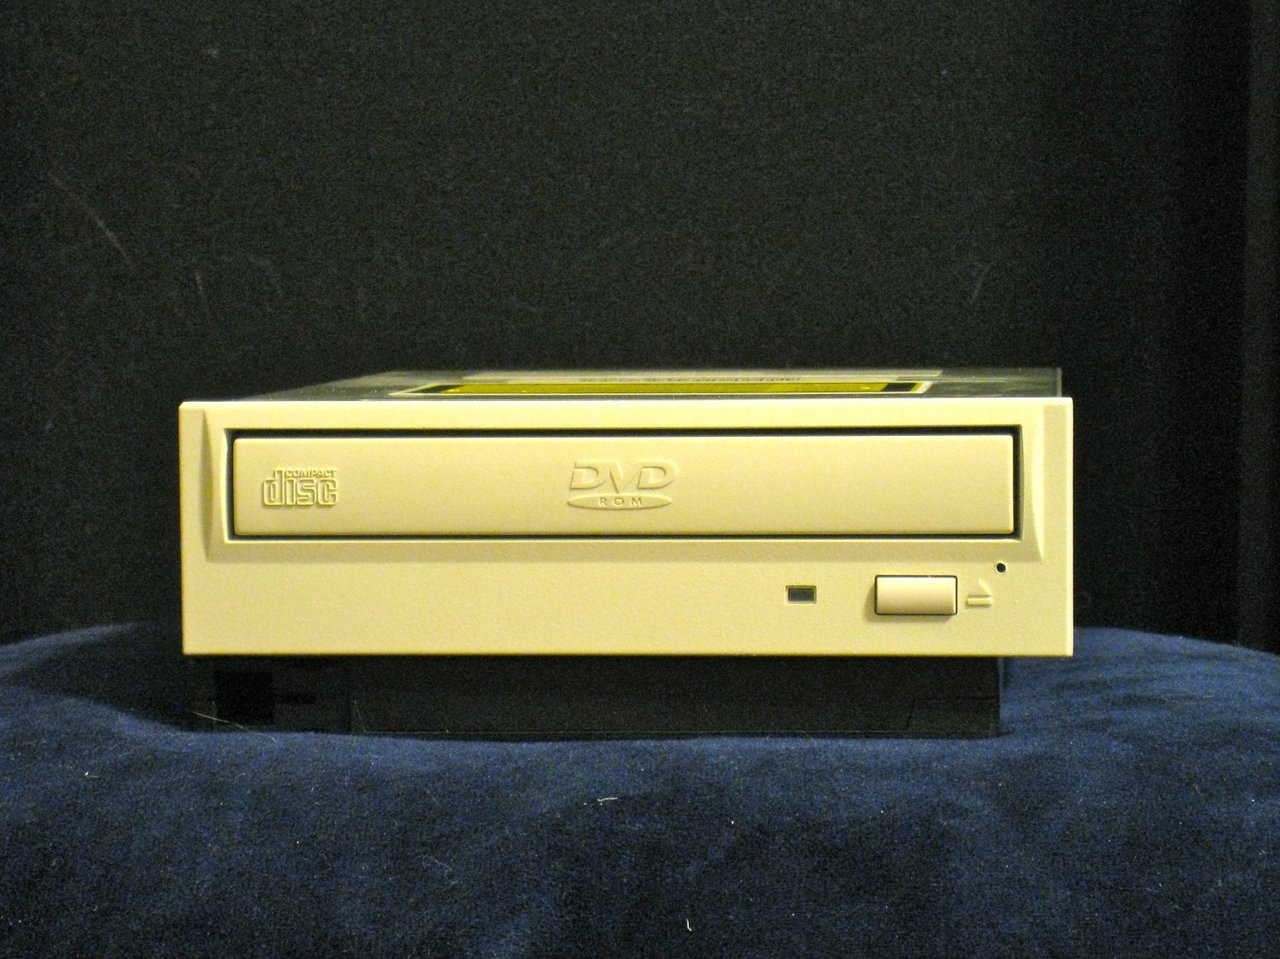 SD-M1212 - Toshiba 6x dvd-ROM Drive - dvd-ROM - EIDE/ATAPI - Internal